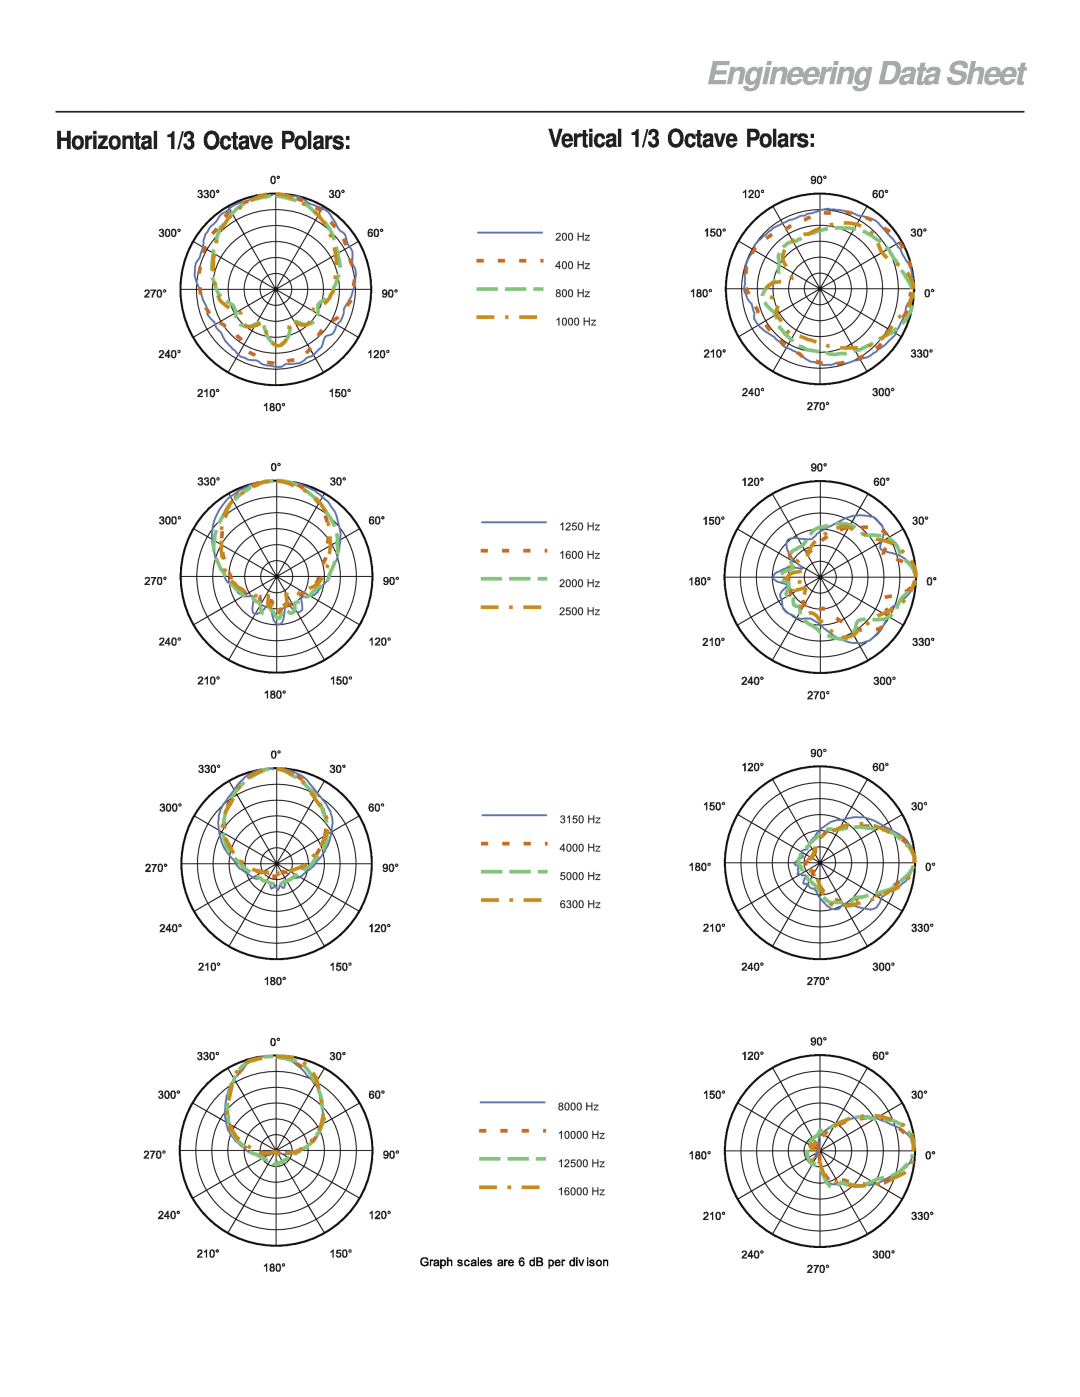 Electro-Voice XI-1152A/64F Engineering Data Sheet, Horizontal 1/3 Octave Polars, Vertical 1/3 Octave Polars 